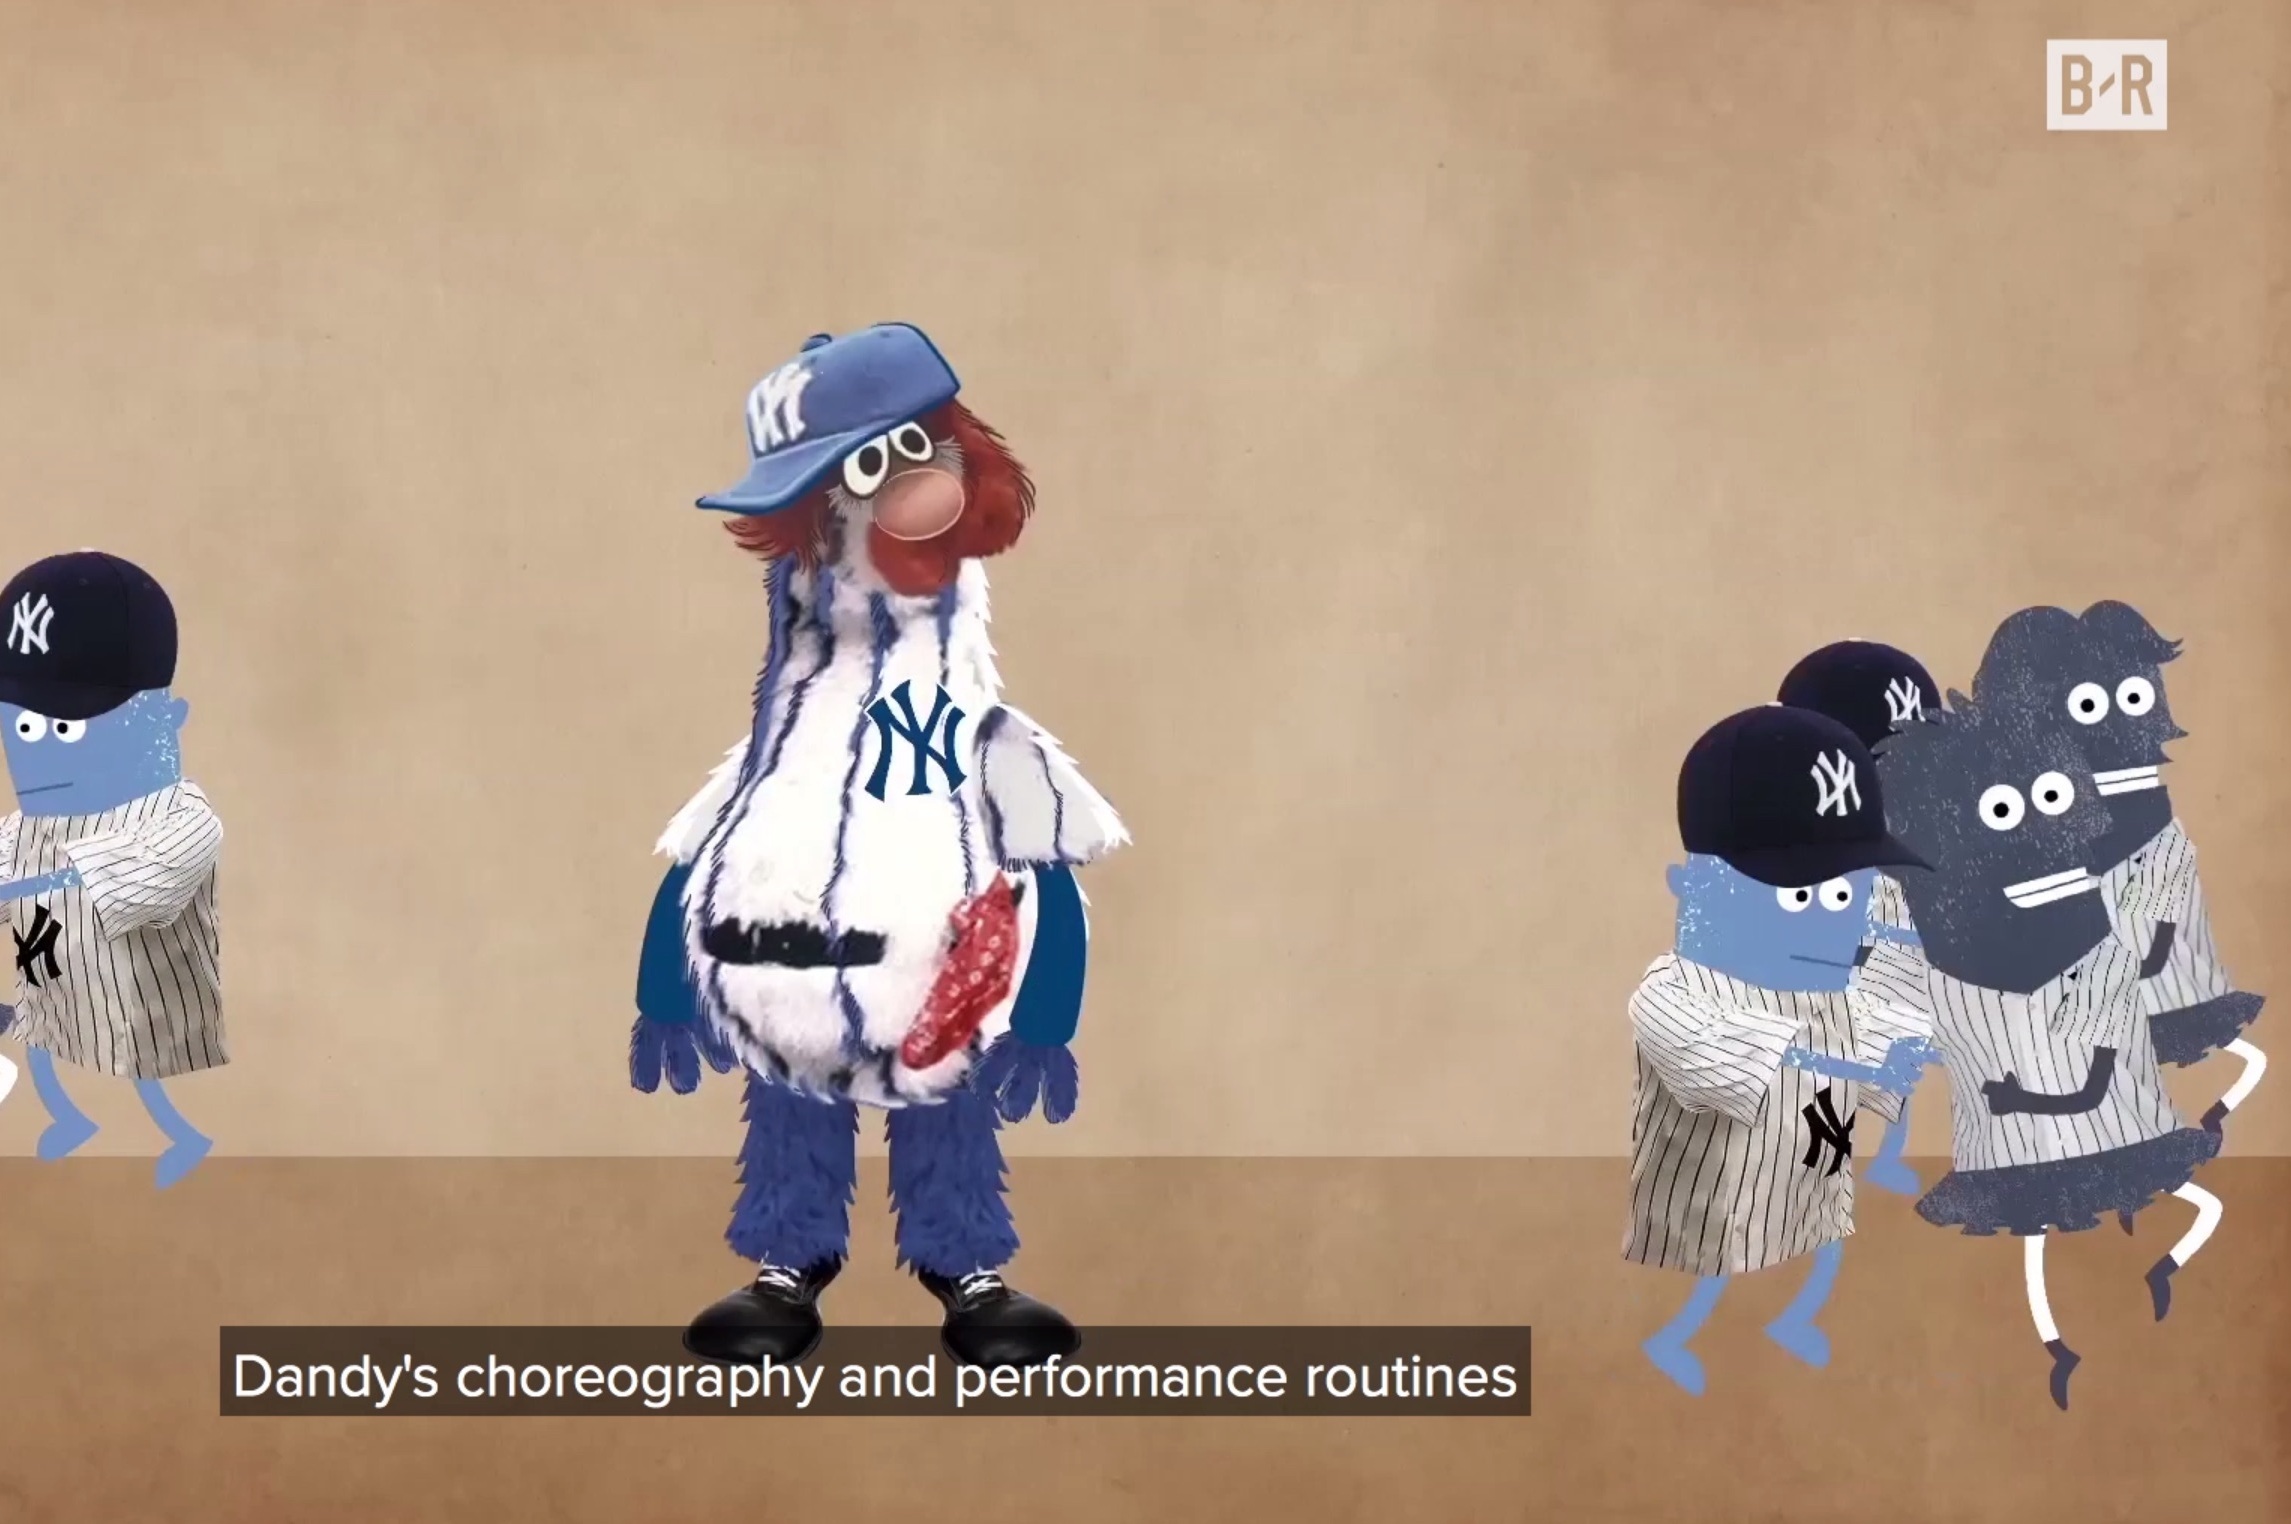 Dandy”, The Forgotten NY Yankees Mascot – SportsLogos.Net News